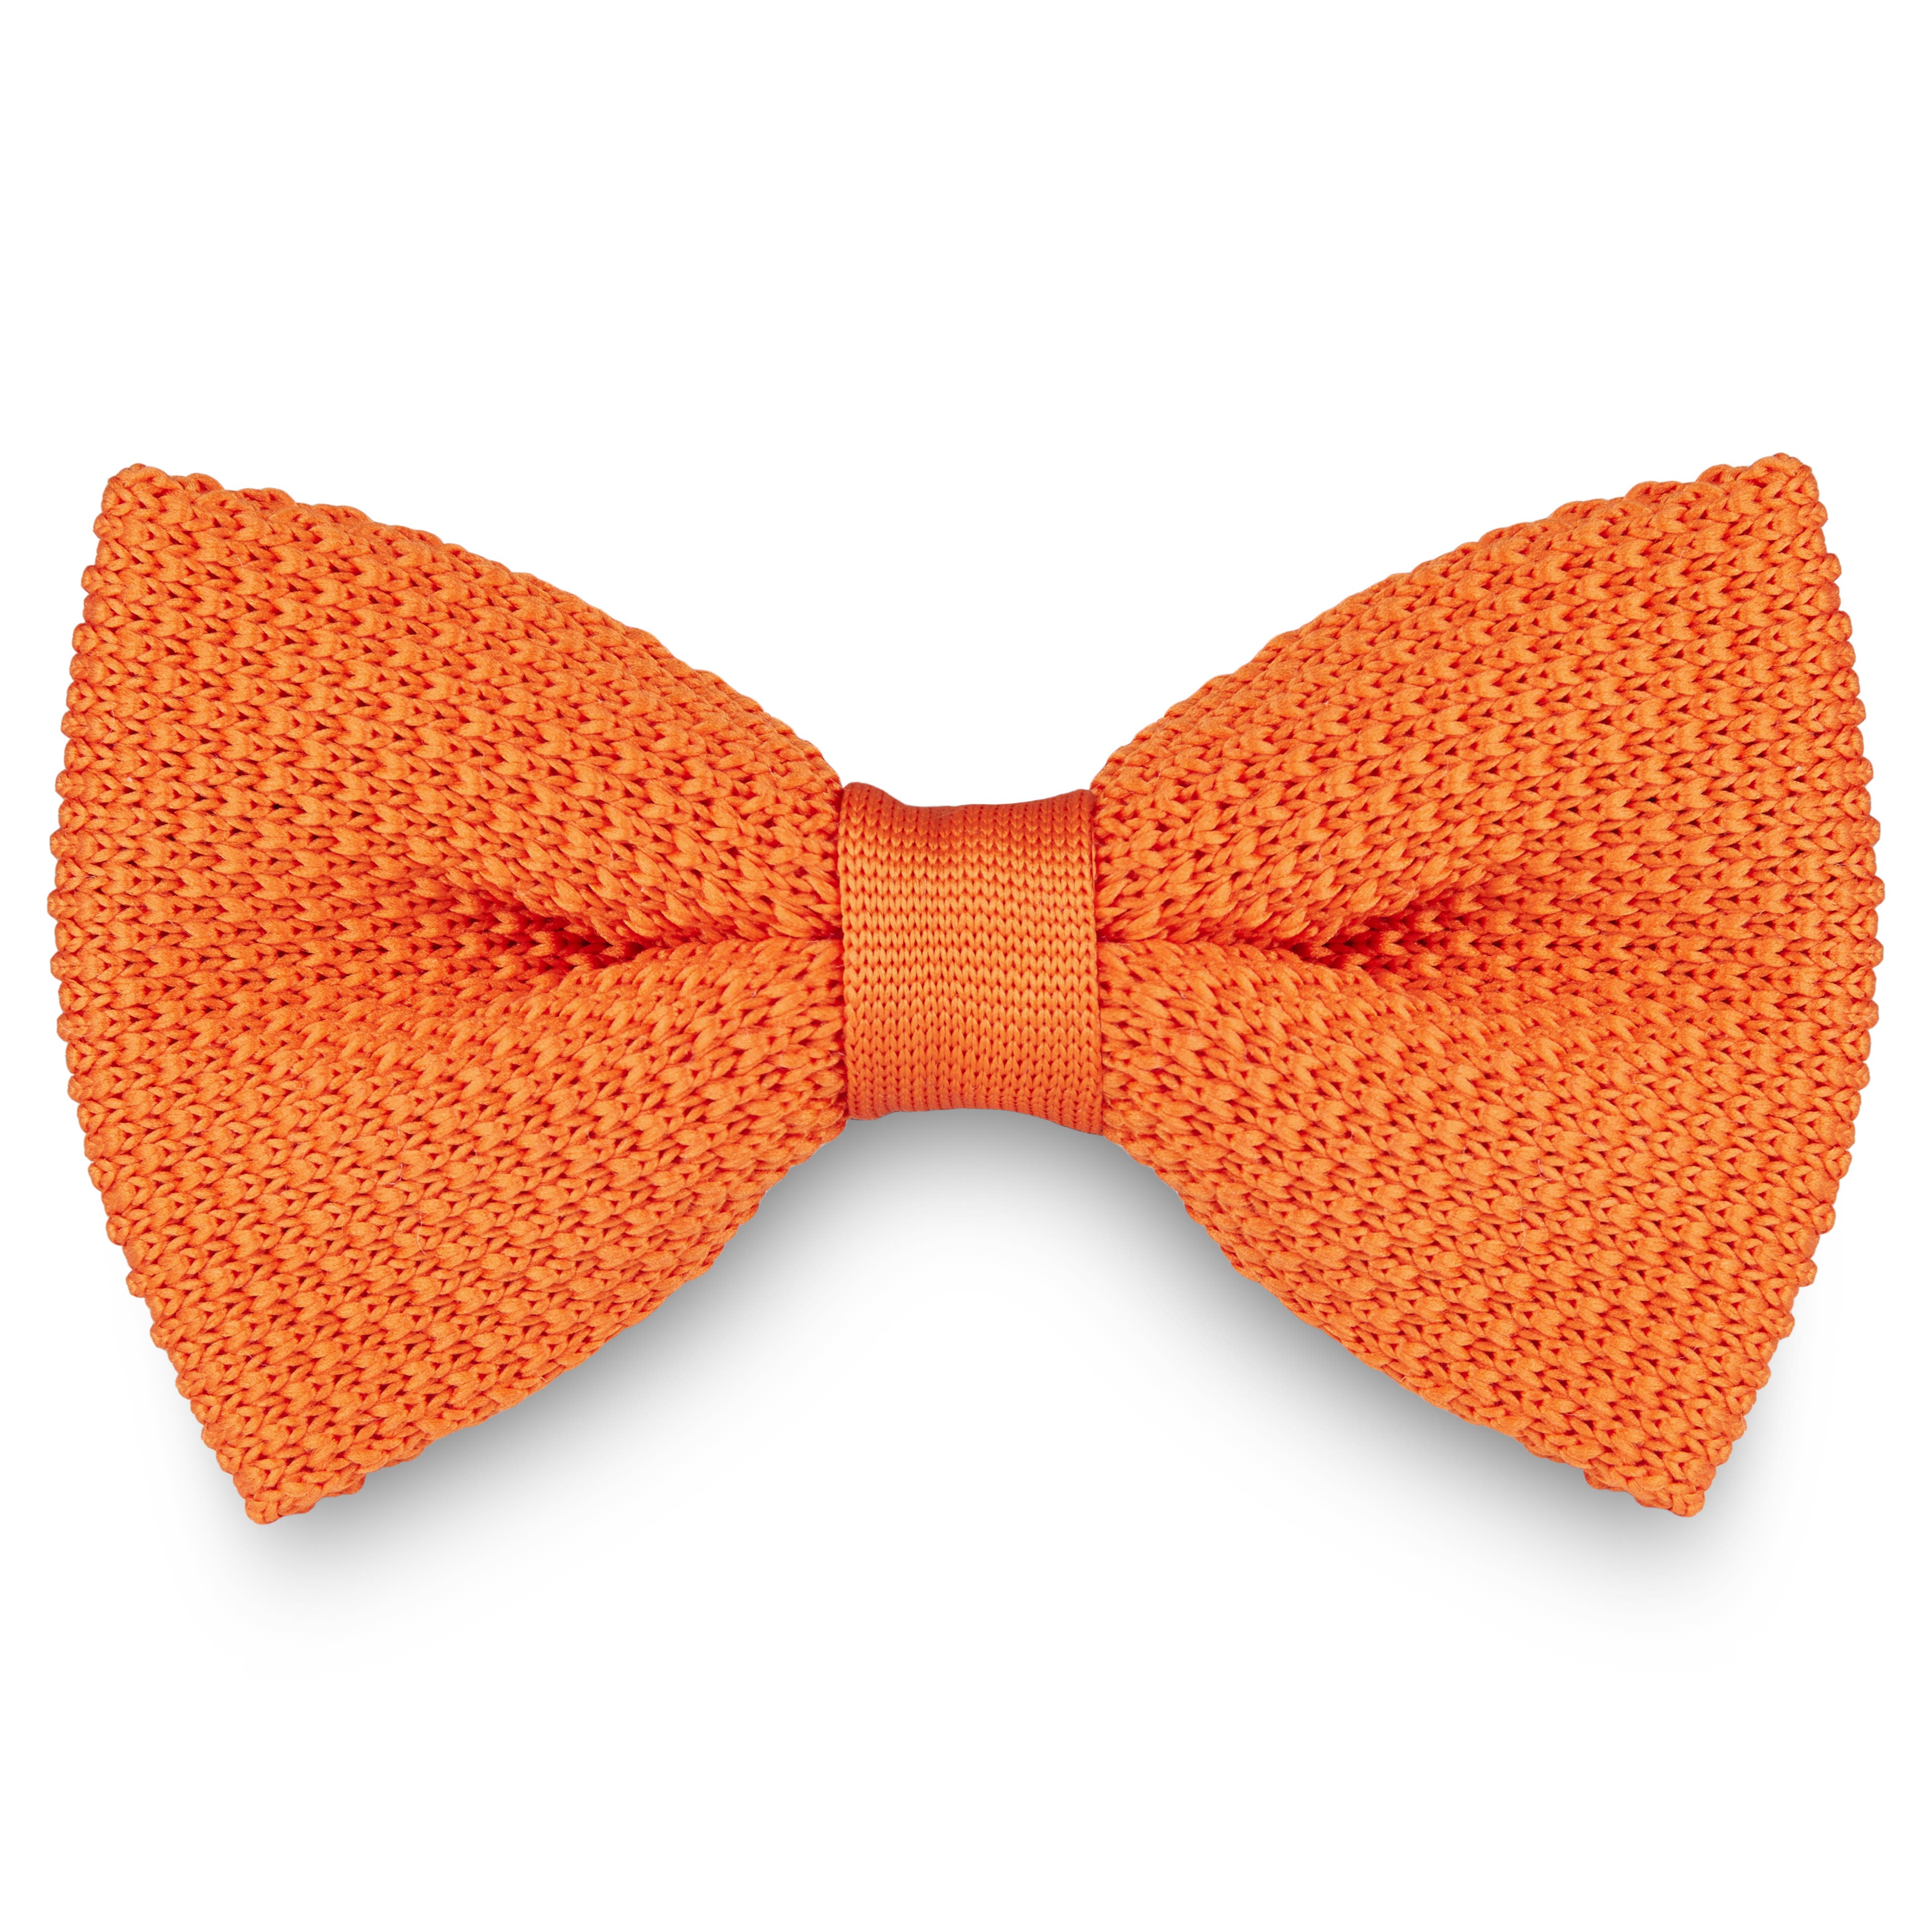 True Orange Knitted Pre-Tied Bow Tie